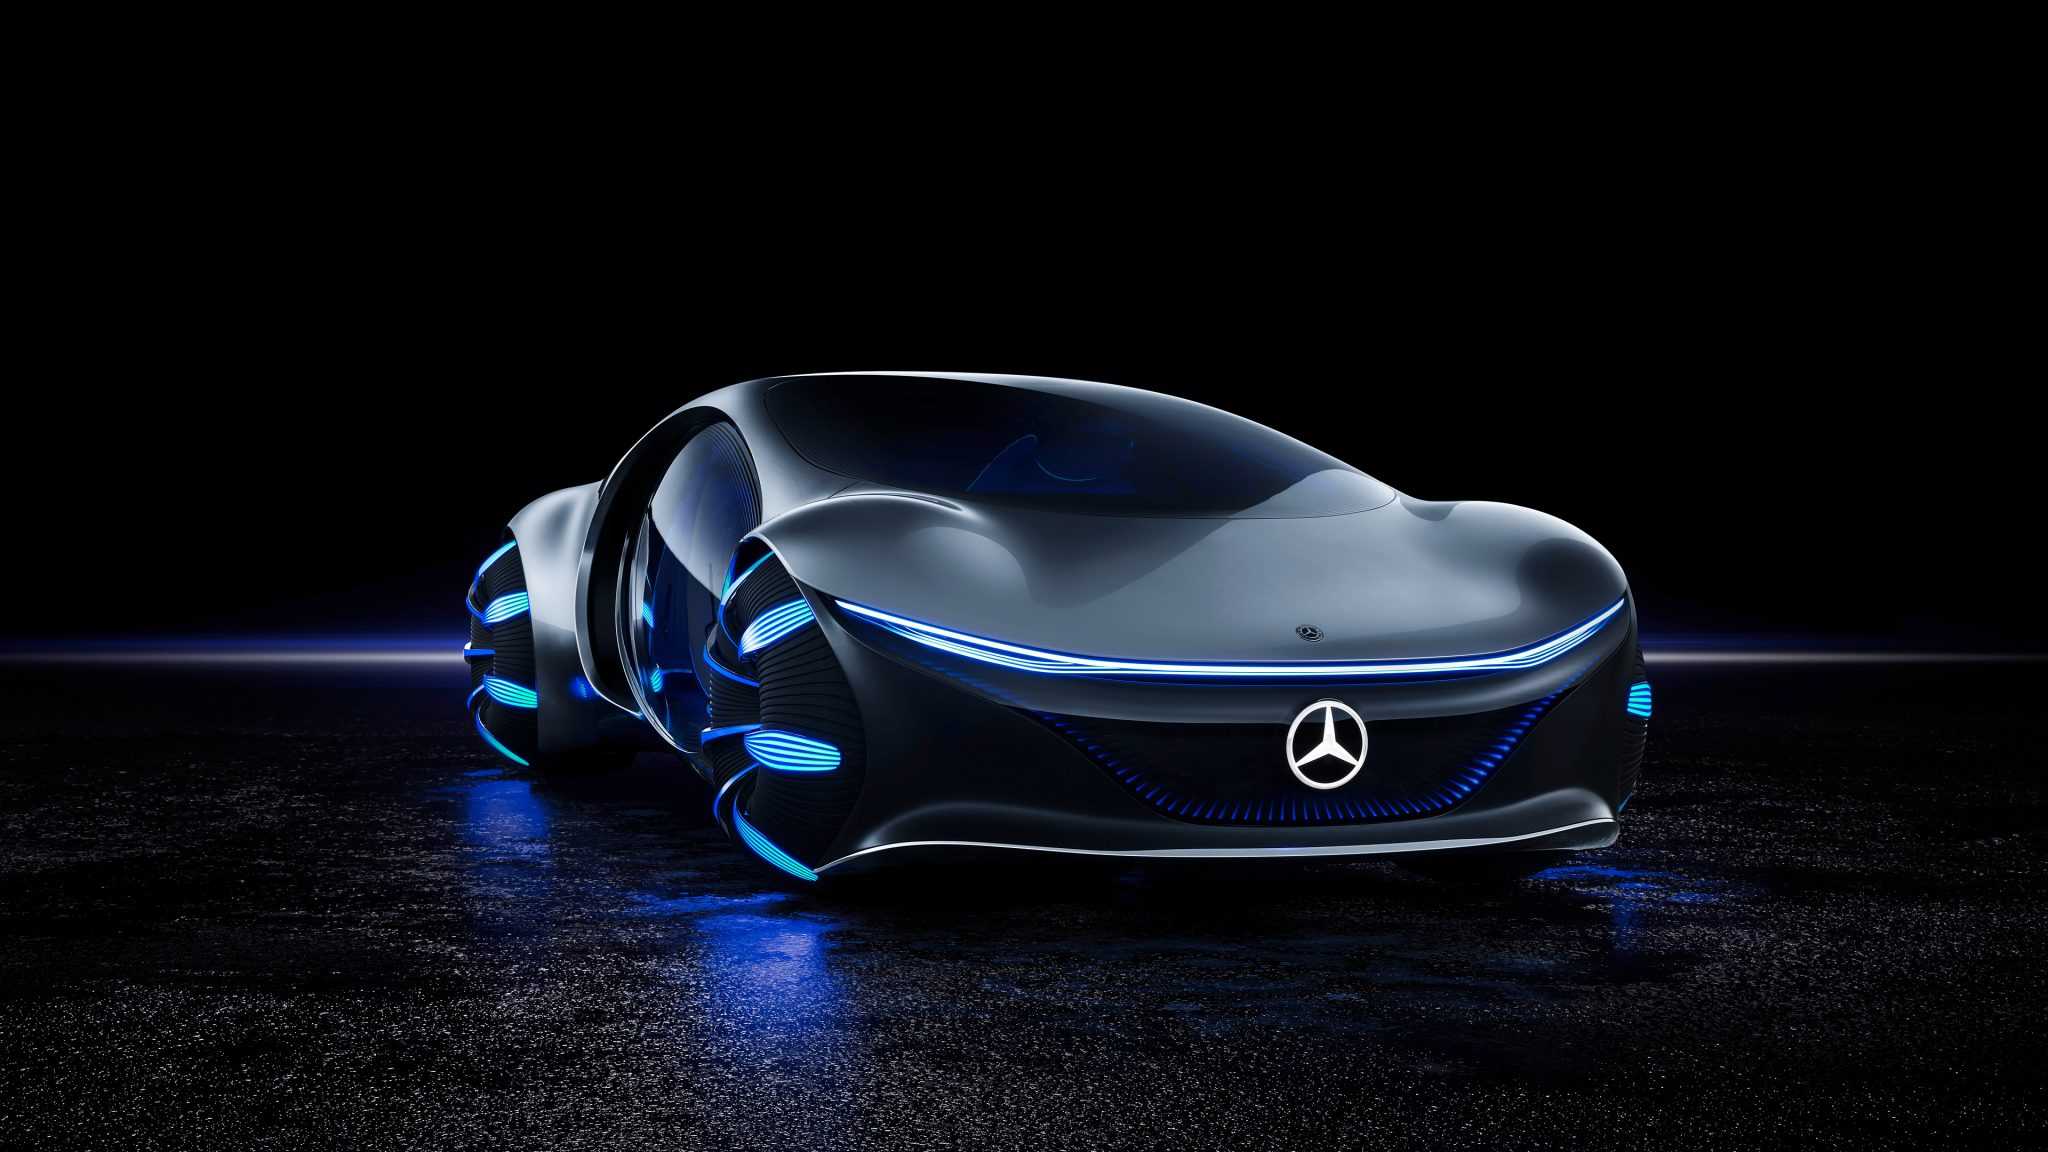 Mercedes-benz vision avtr